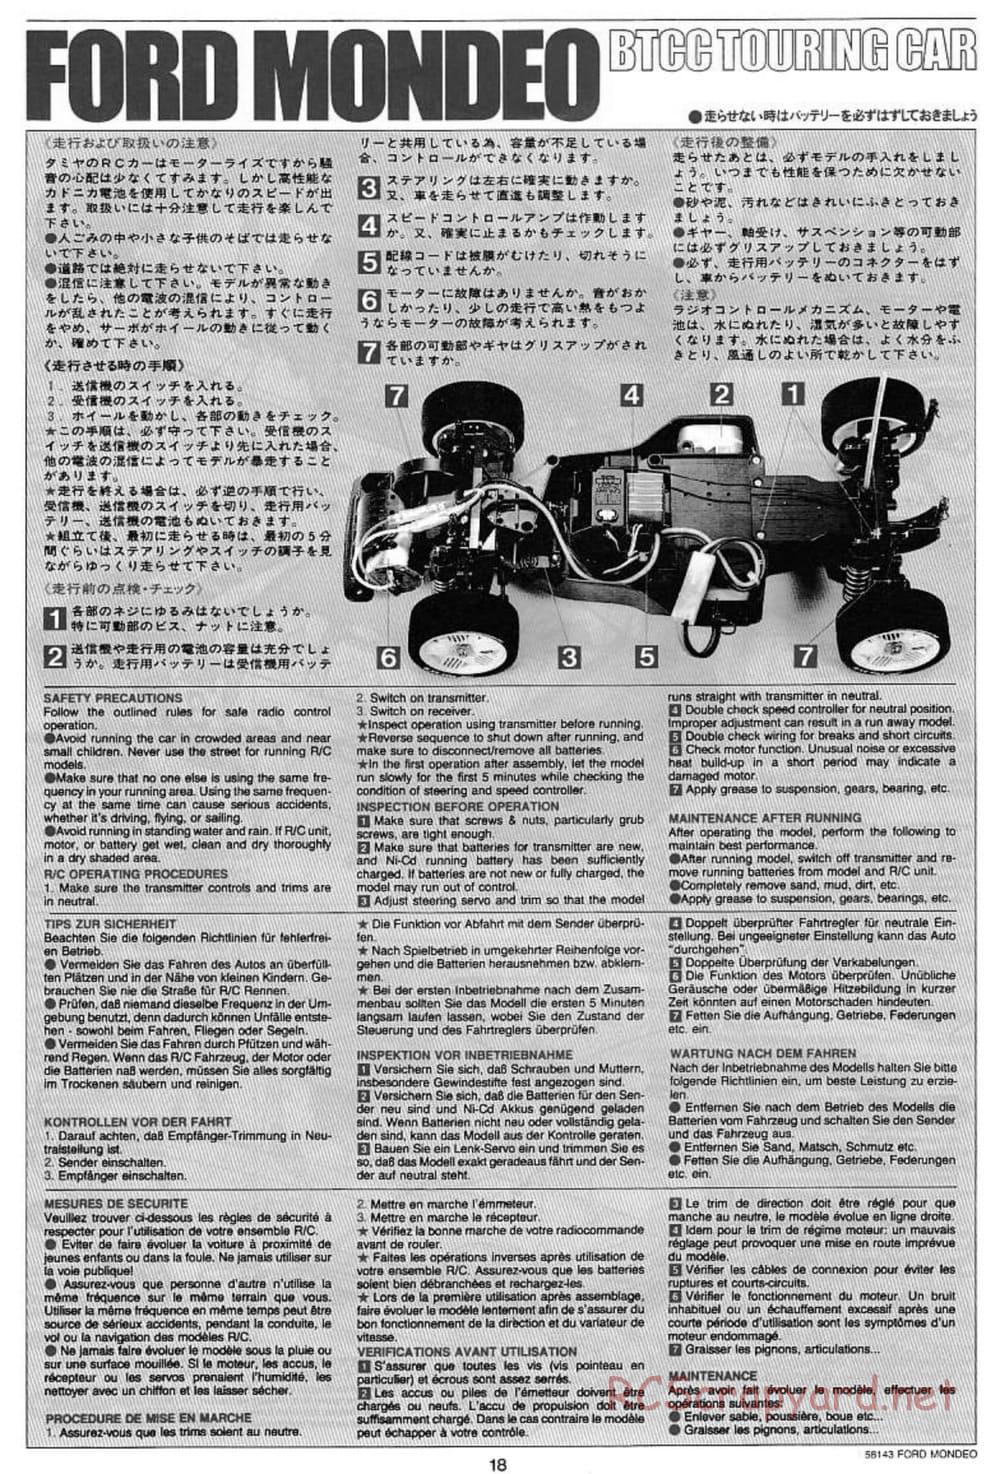 Tamiya - Ford Mondeo BTCC - FF-01 Chassis - Manual - Page 18